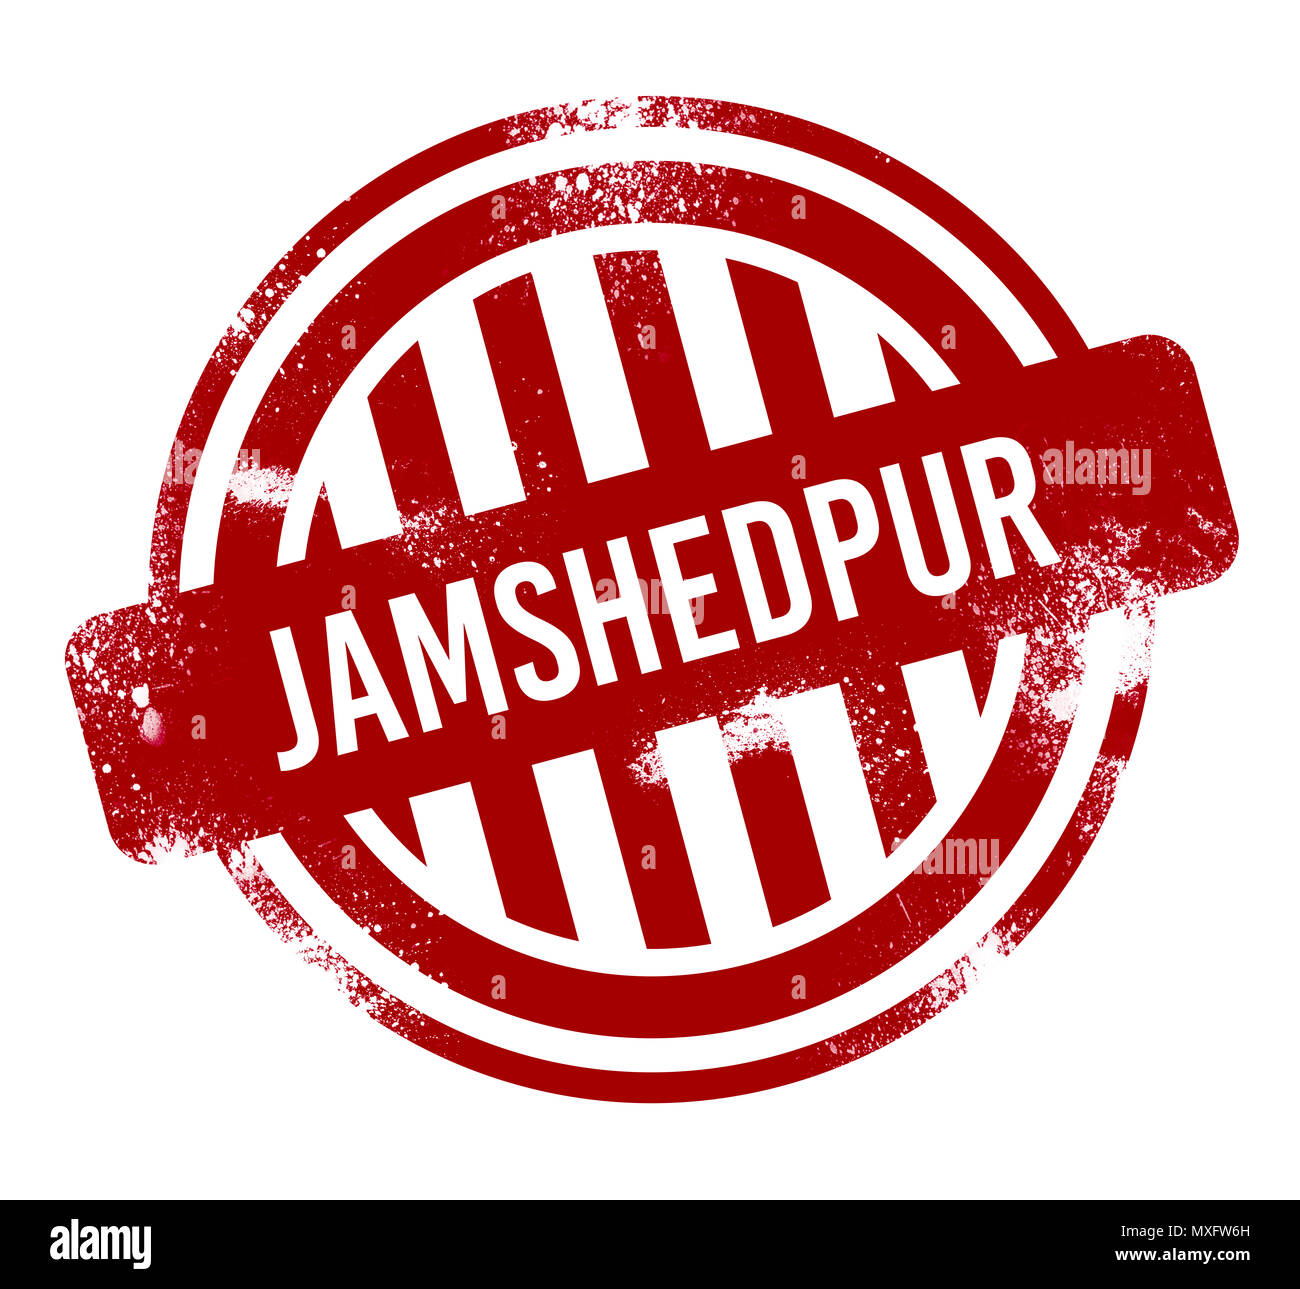 Jamshedpur - Red grunge button, stamp Stock Photo